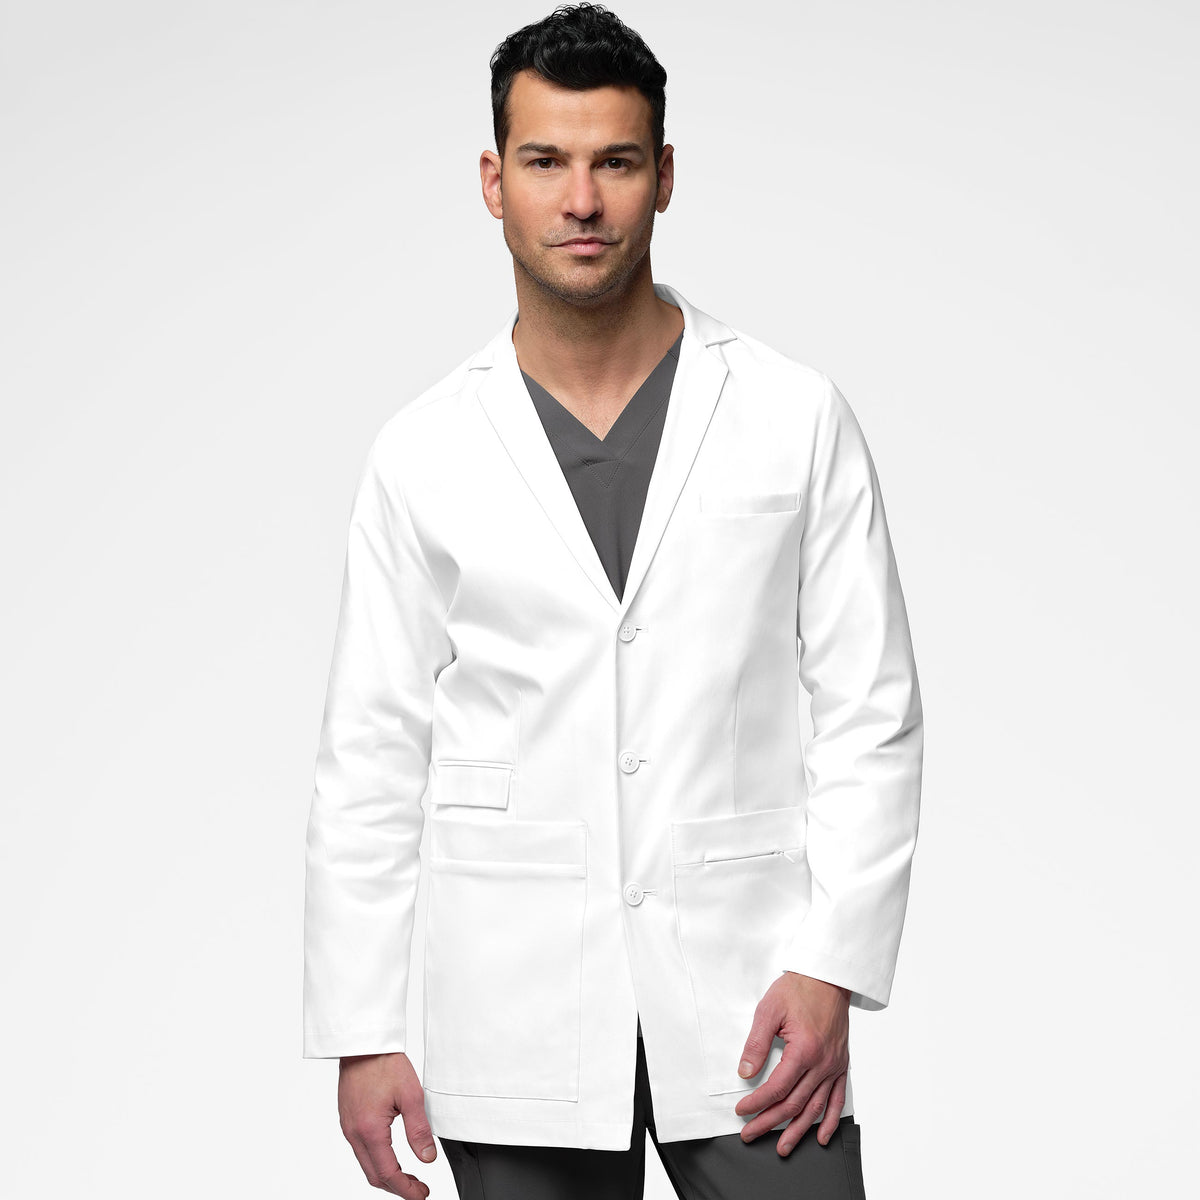 Slate Men's 34 Inch Doctors Coat - White